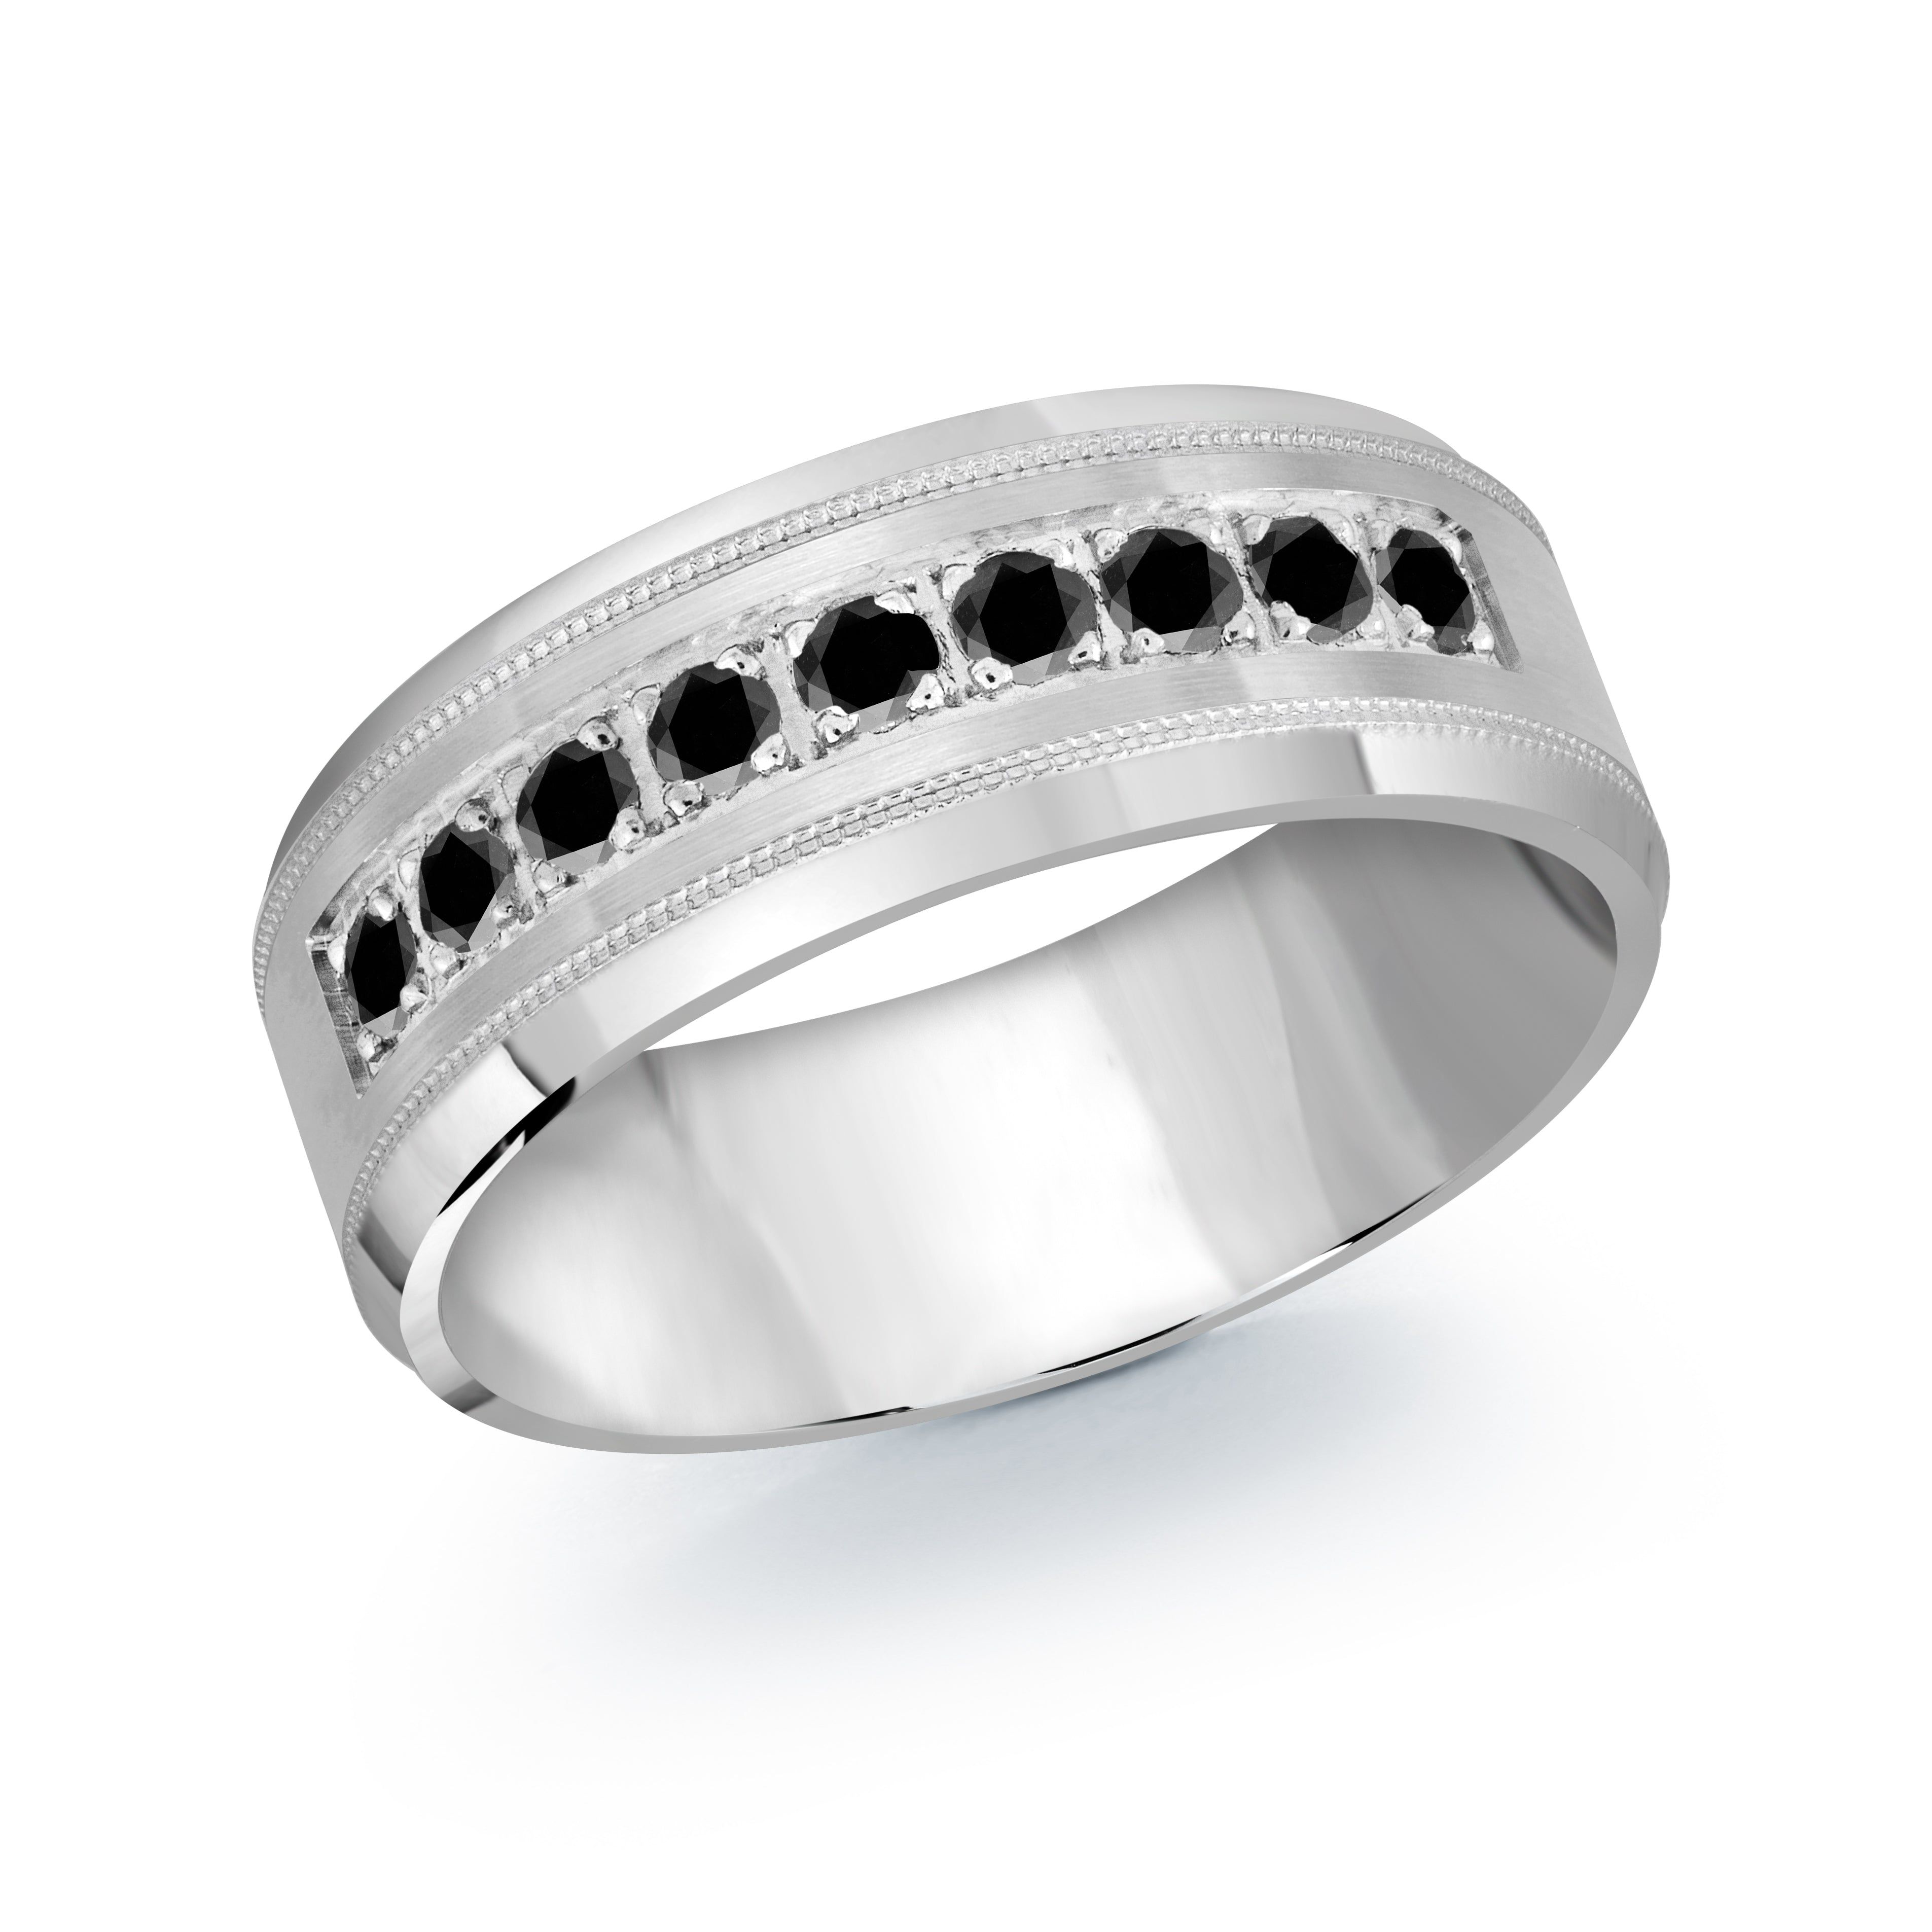 Men's 8mm Black Diamond Wedding Ring with Milgrain